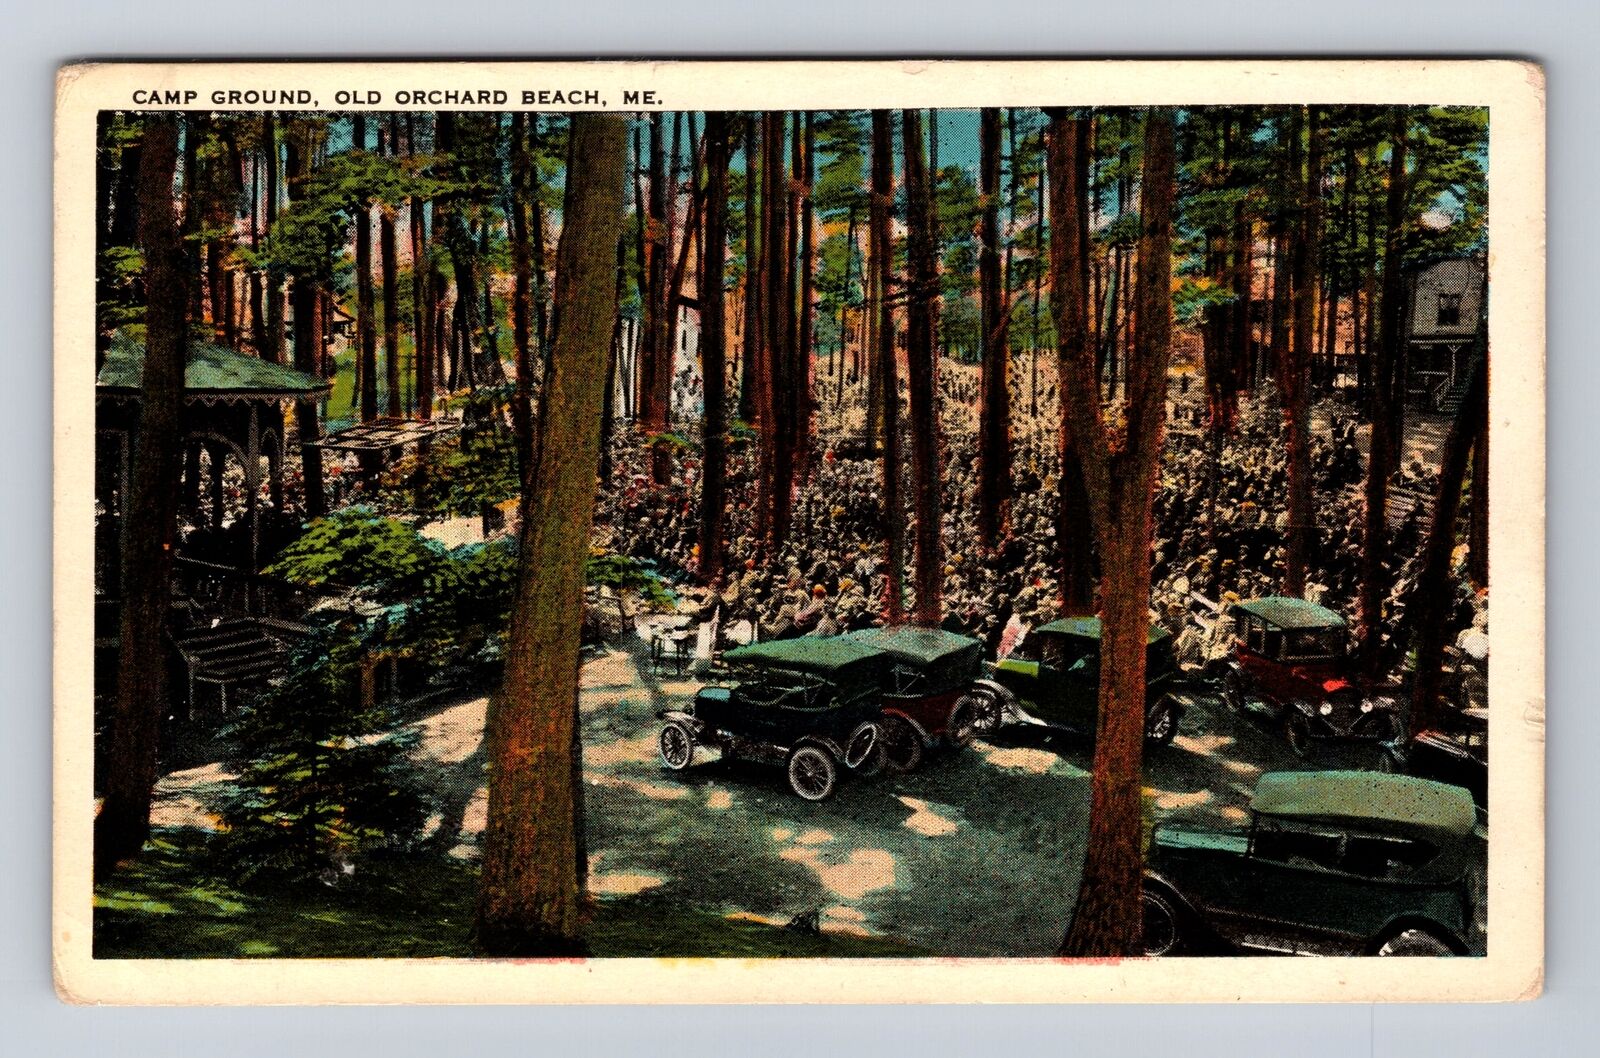 Old Orchard Beach ME-Maine, Camp Ground, Antique, Vintage Souvenir Postcard